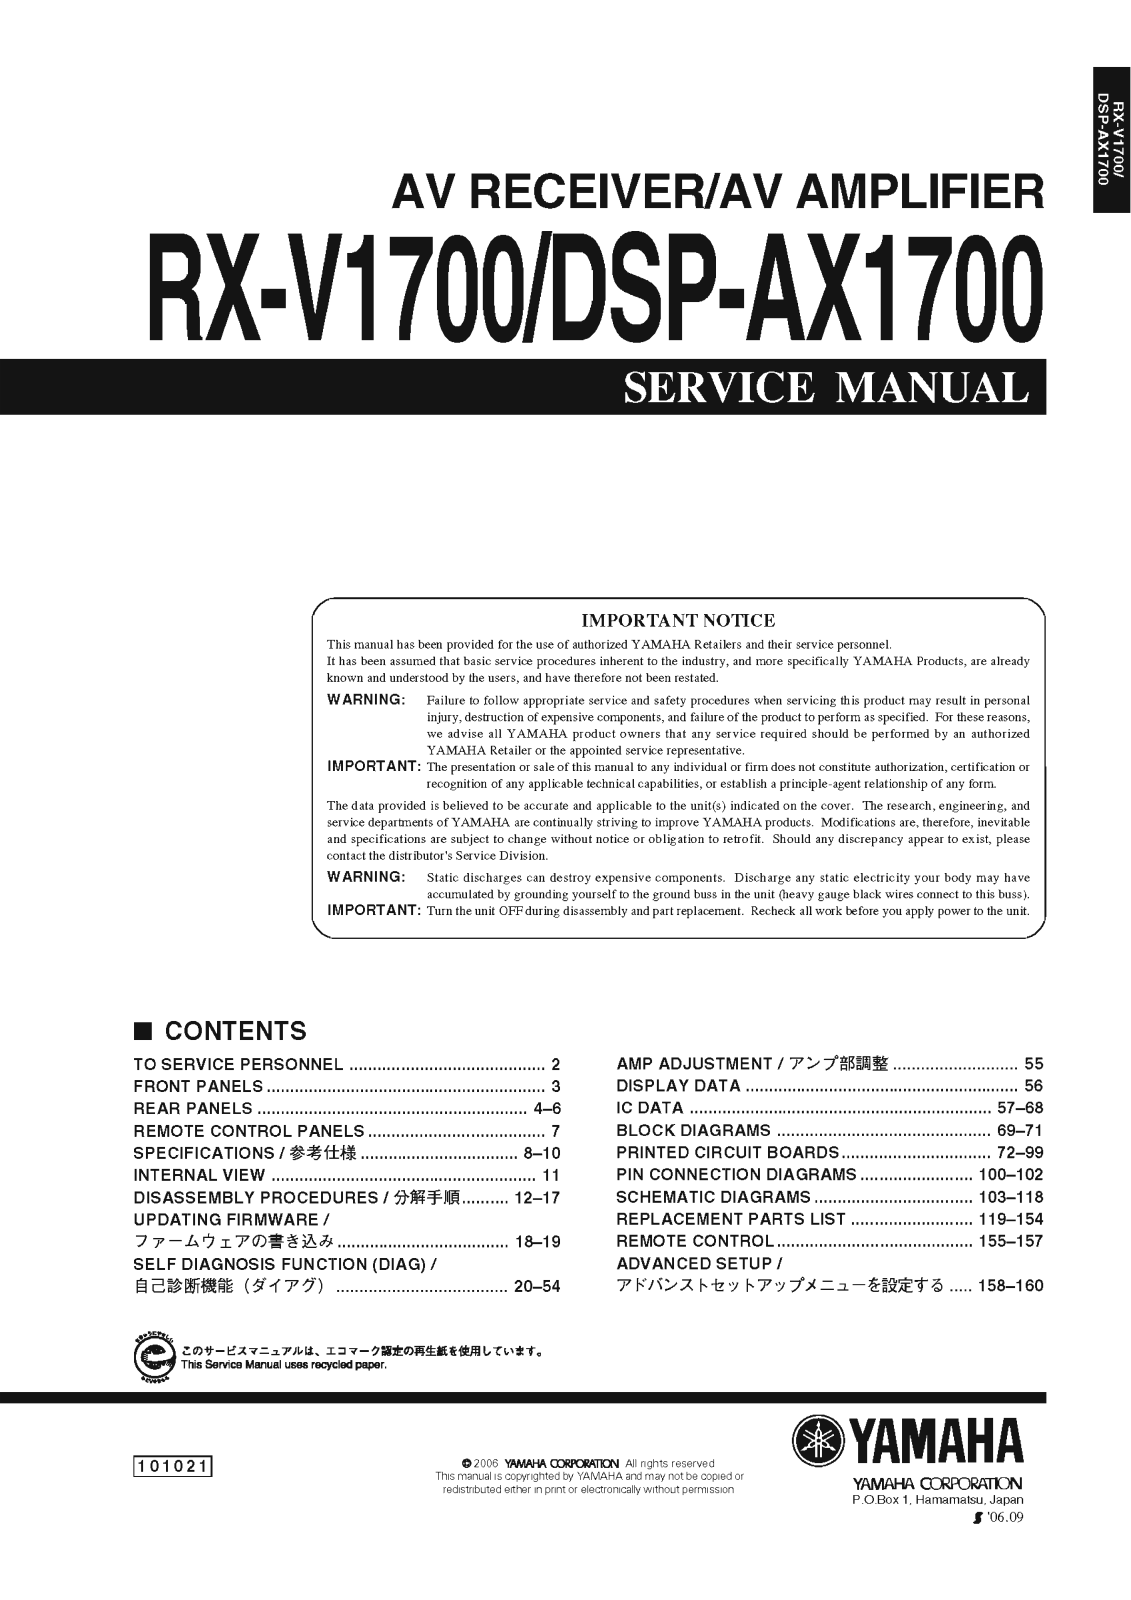 Yamaha DSPAX-1700 Service Manual